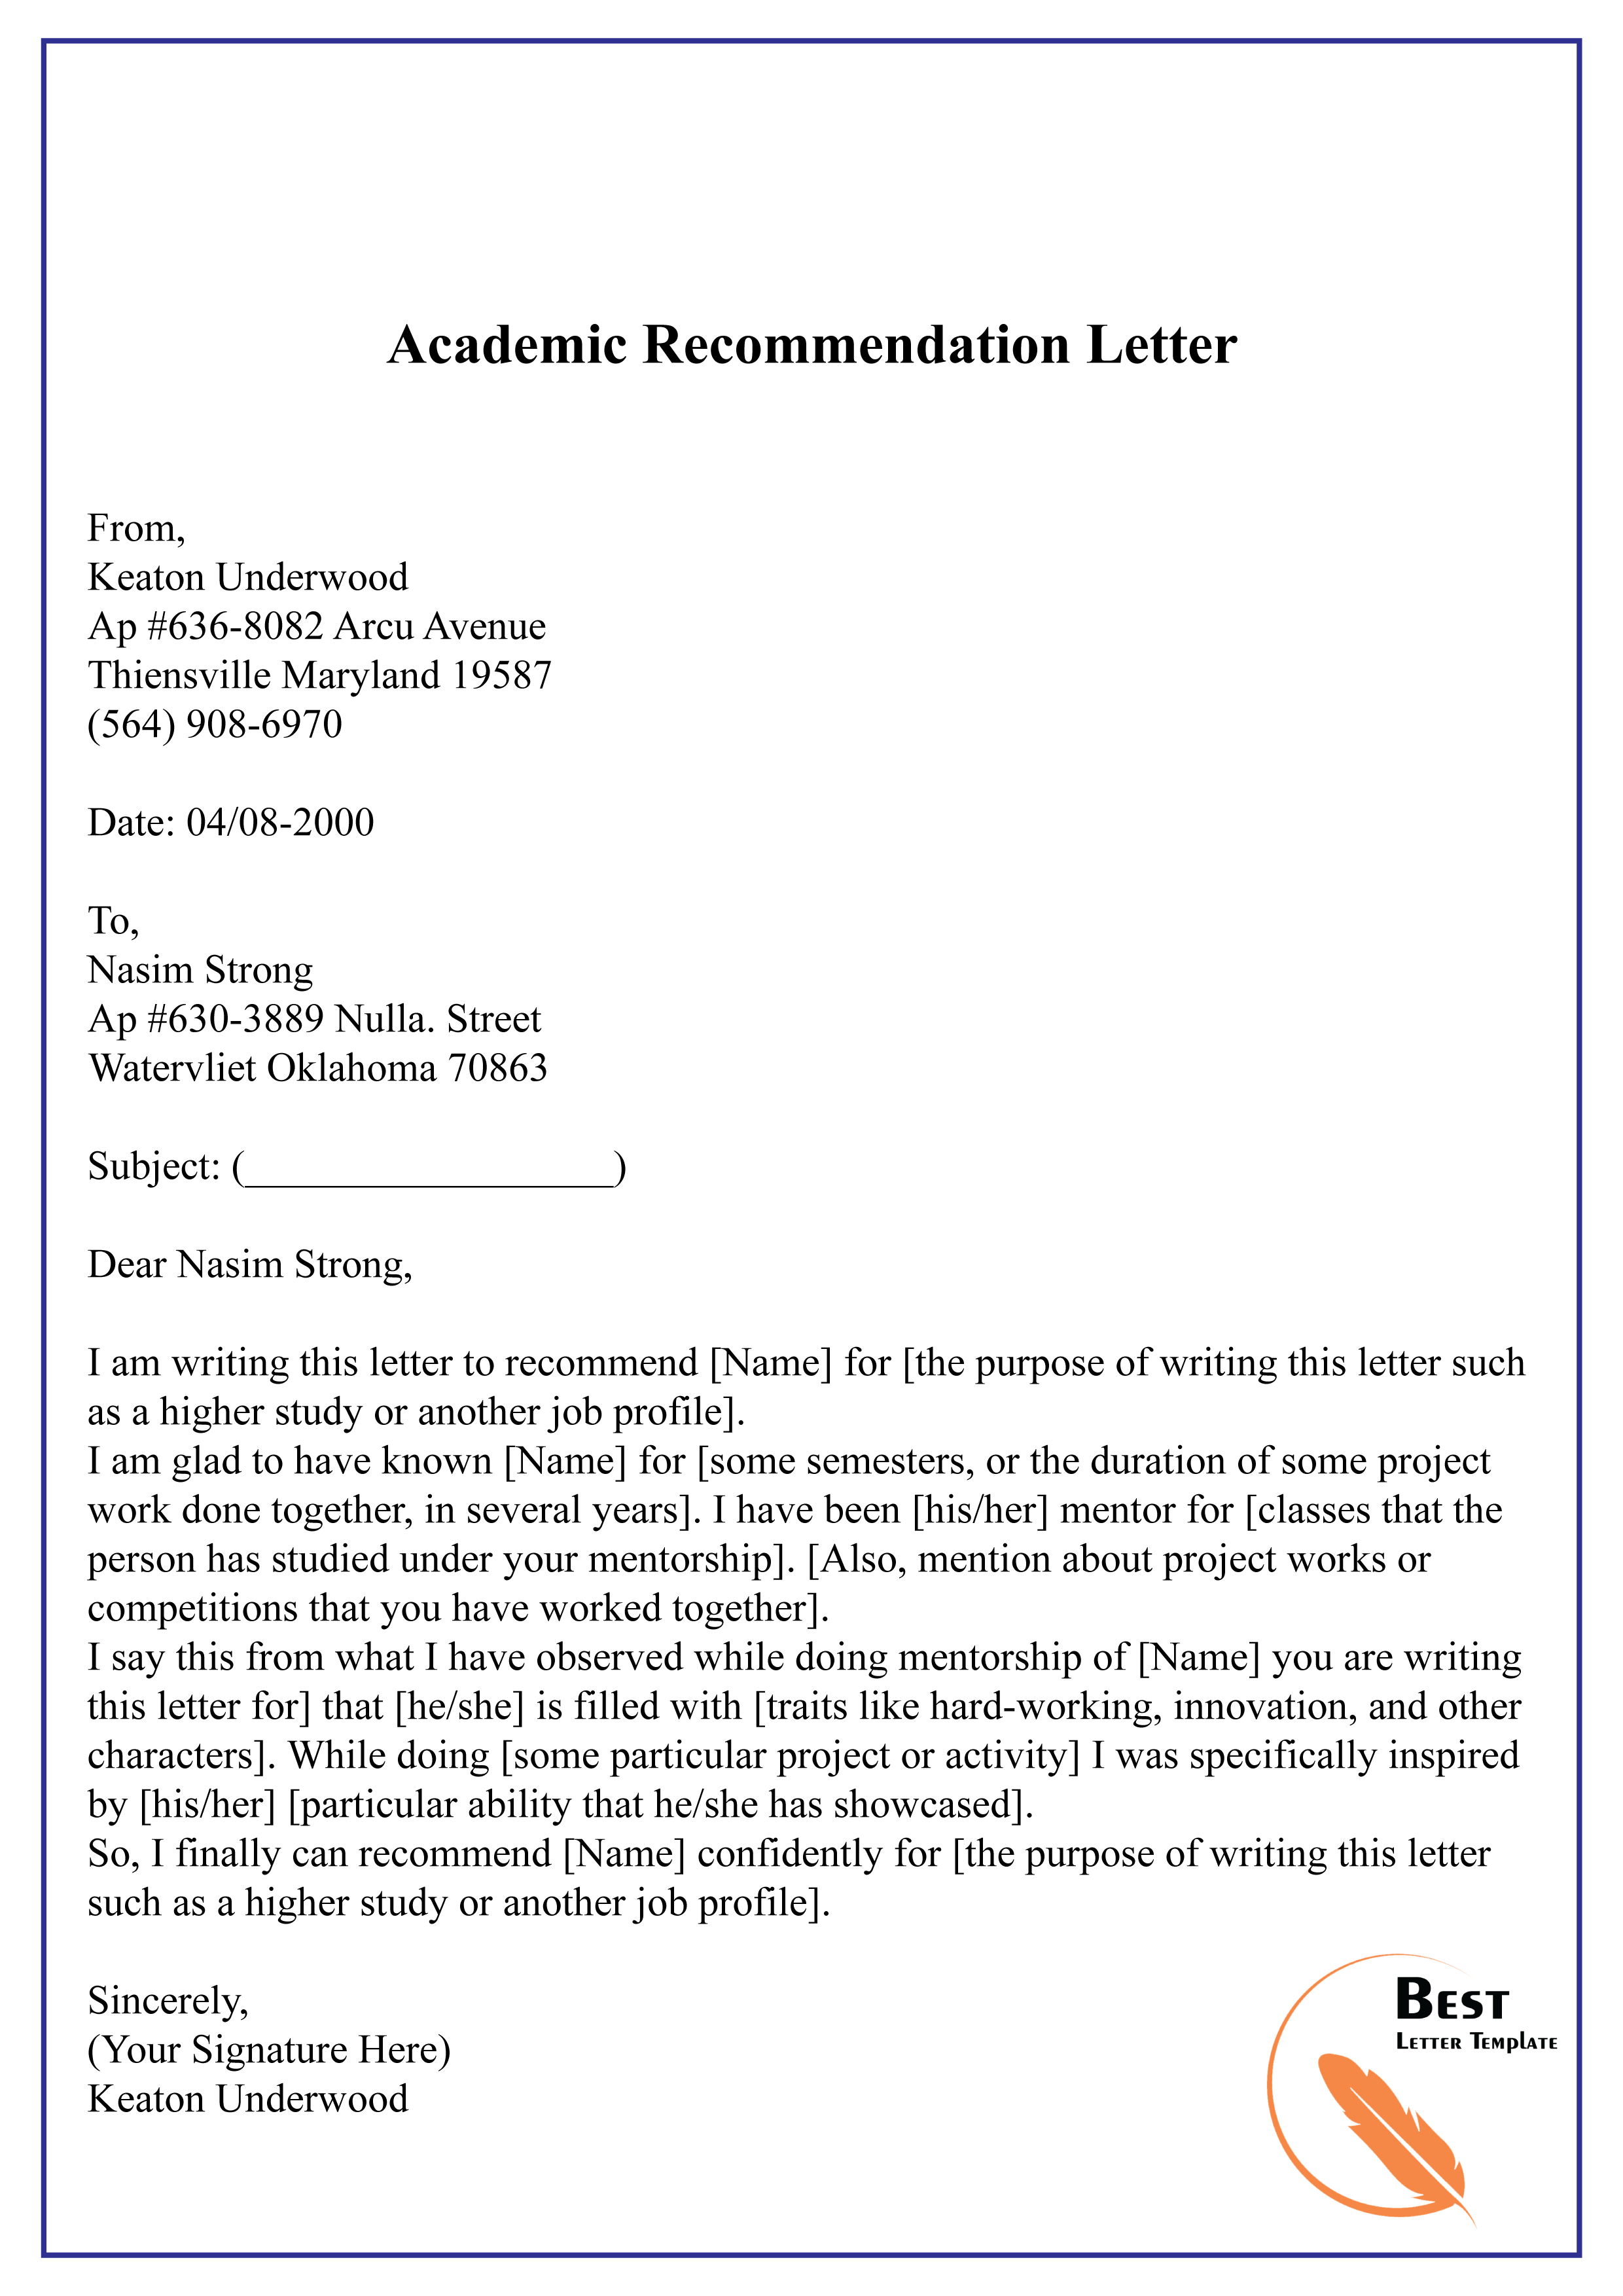 Recommendation letter sample academic jobs